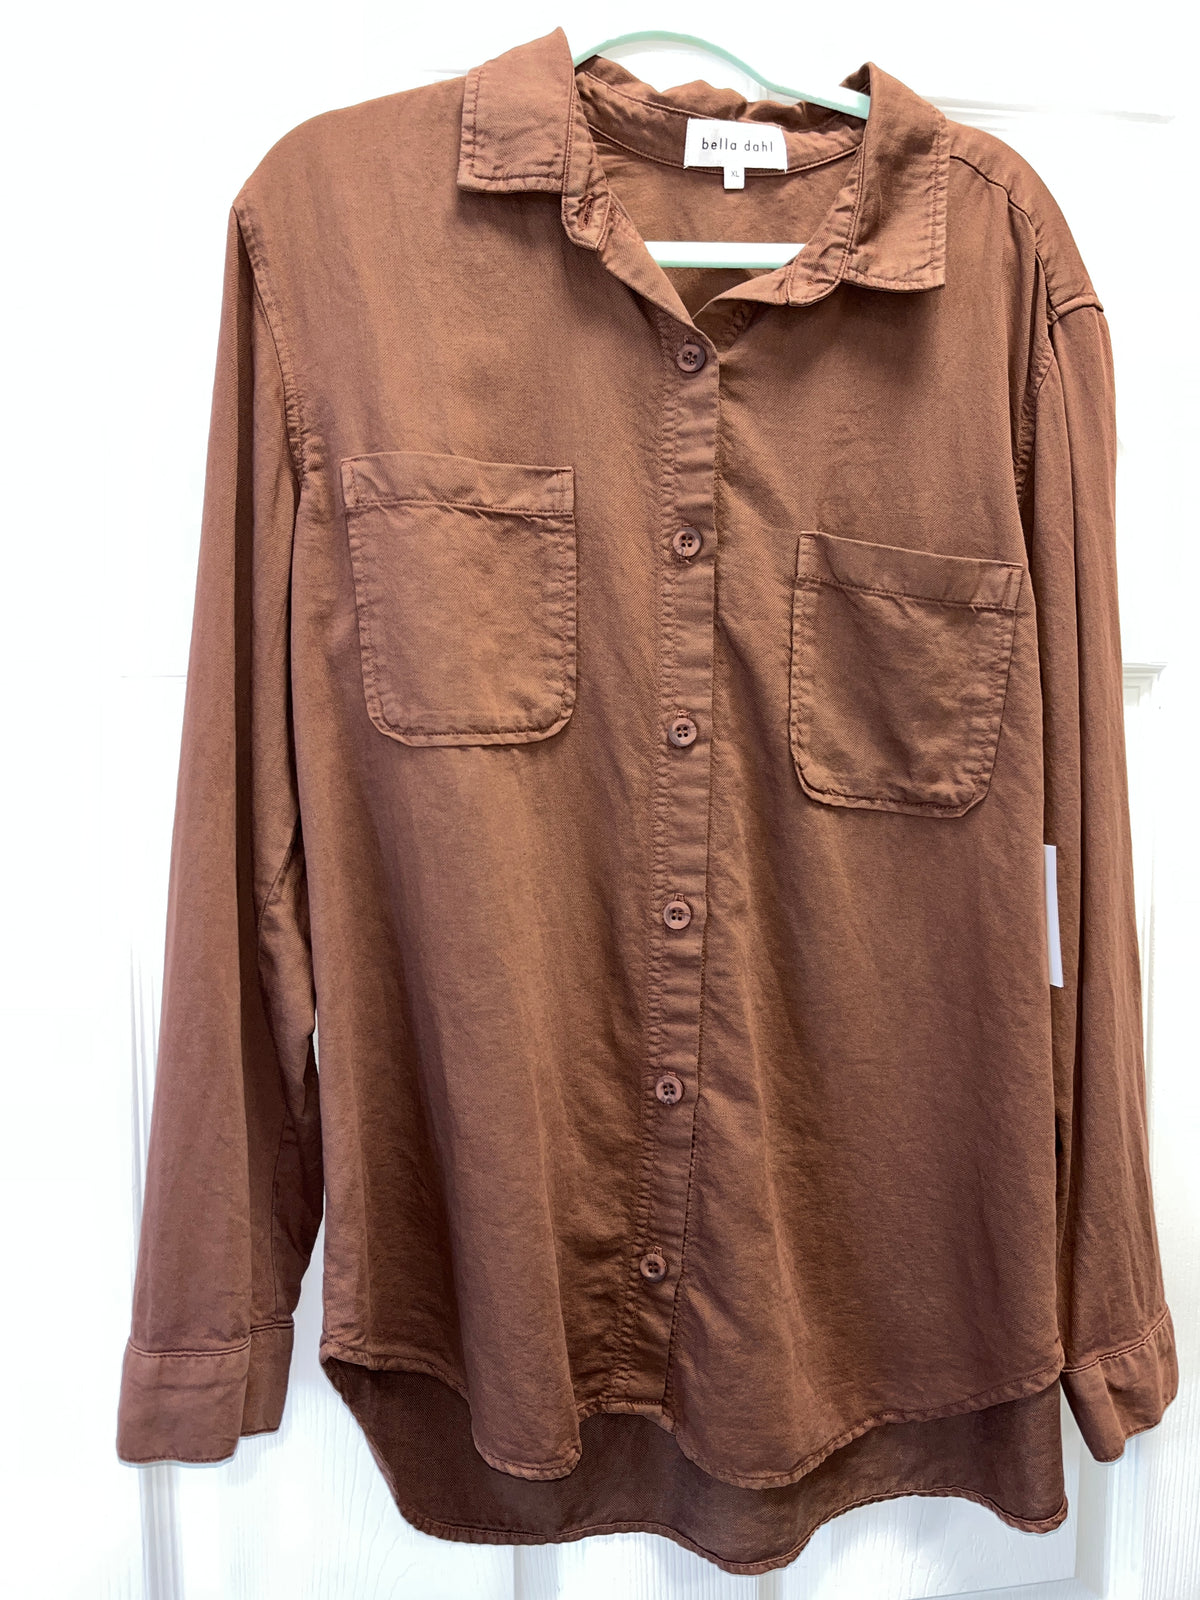 Bella Dahl -Long Sleeve Two Pocket Oversized Shirt - Sequoia